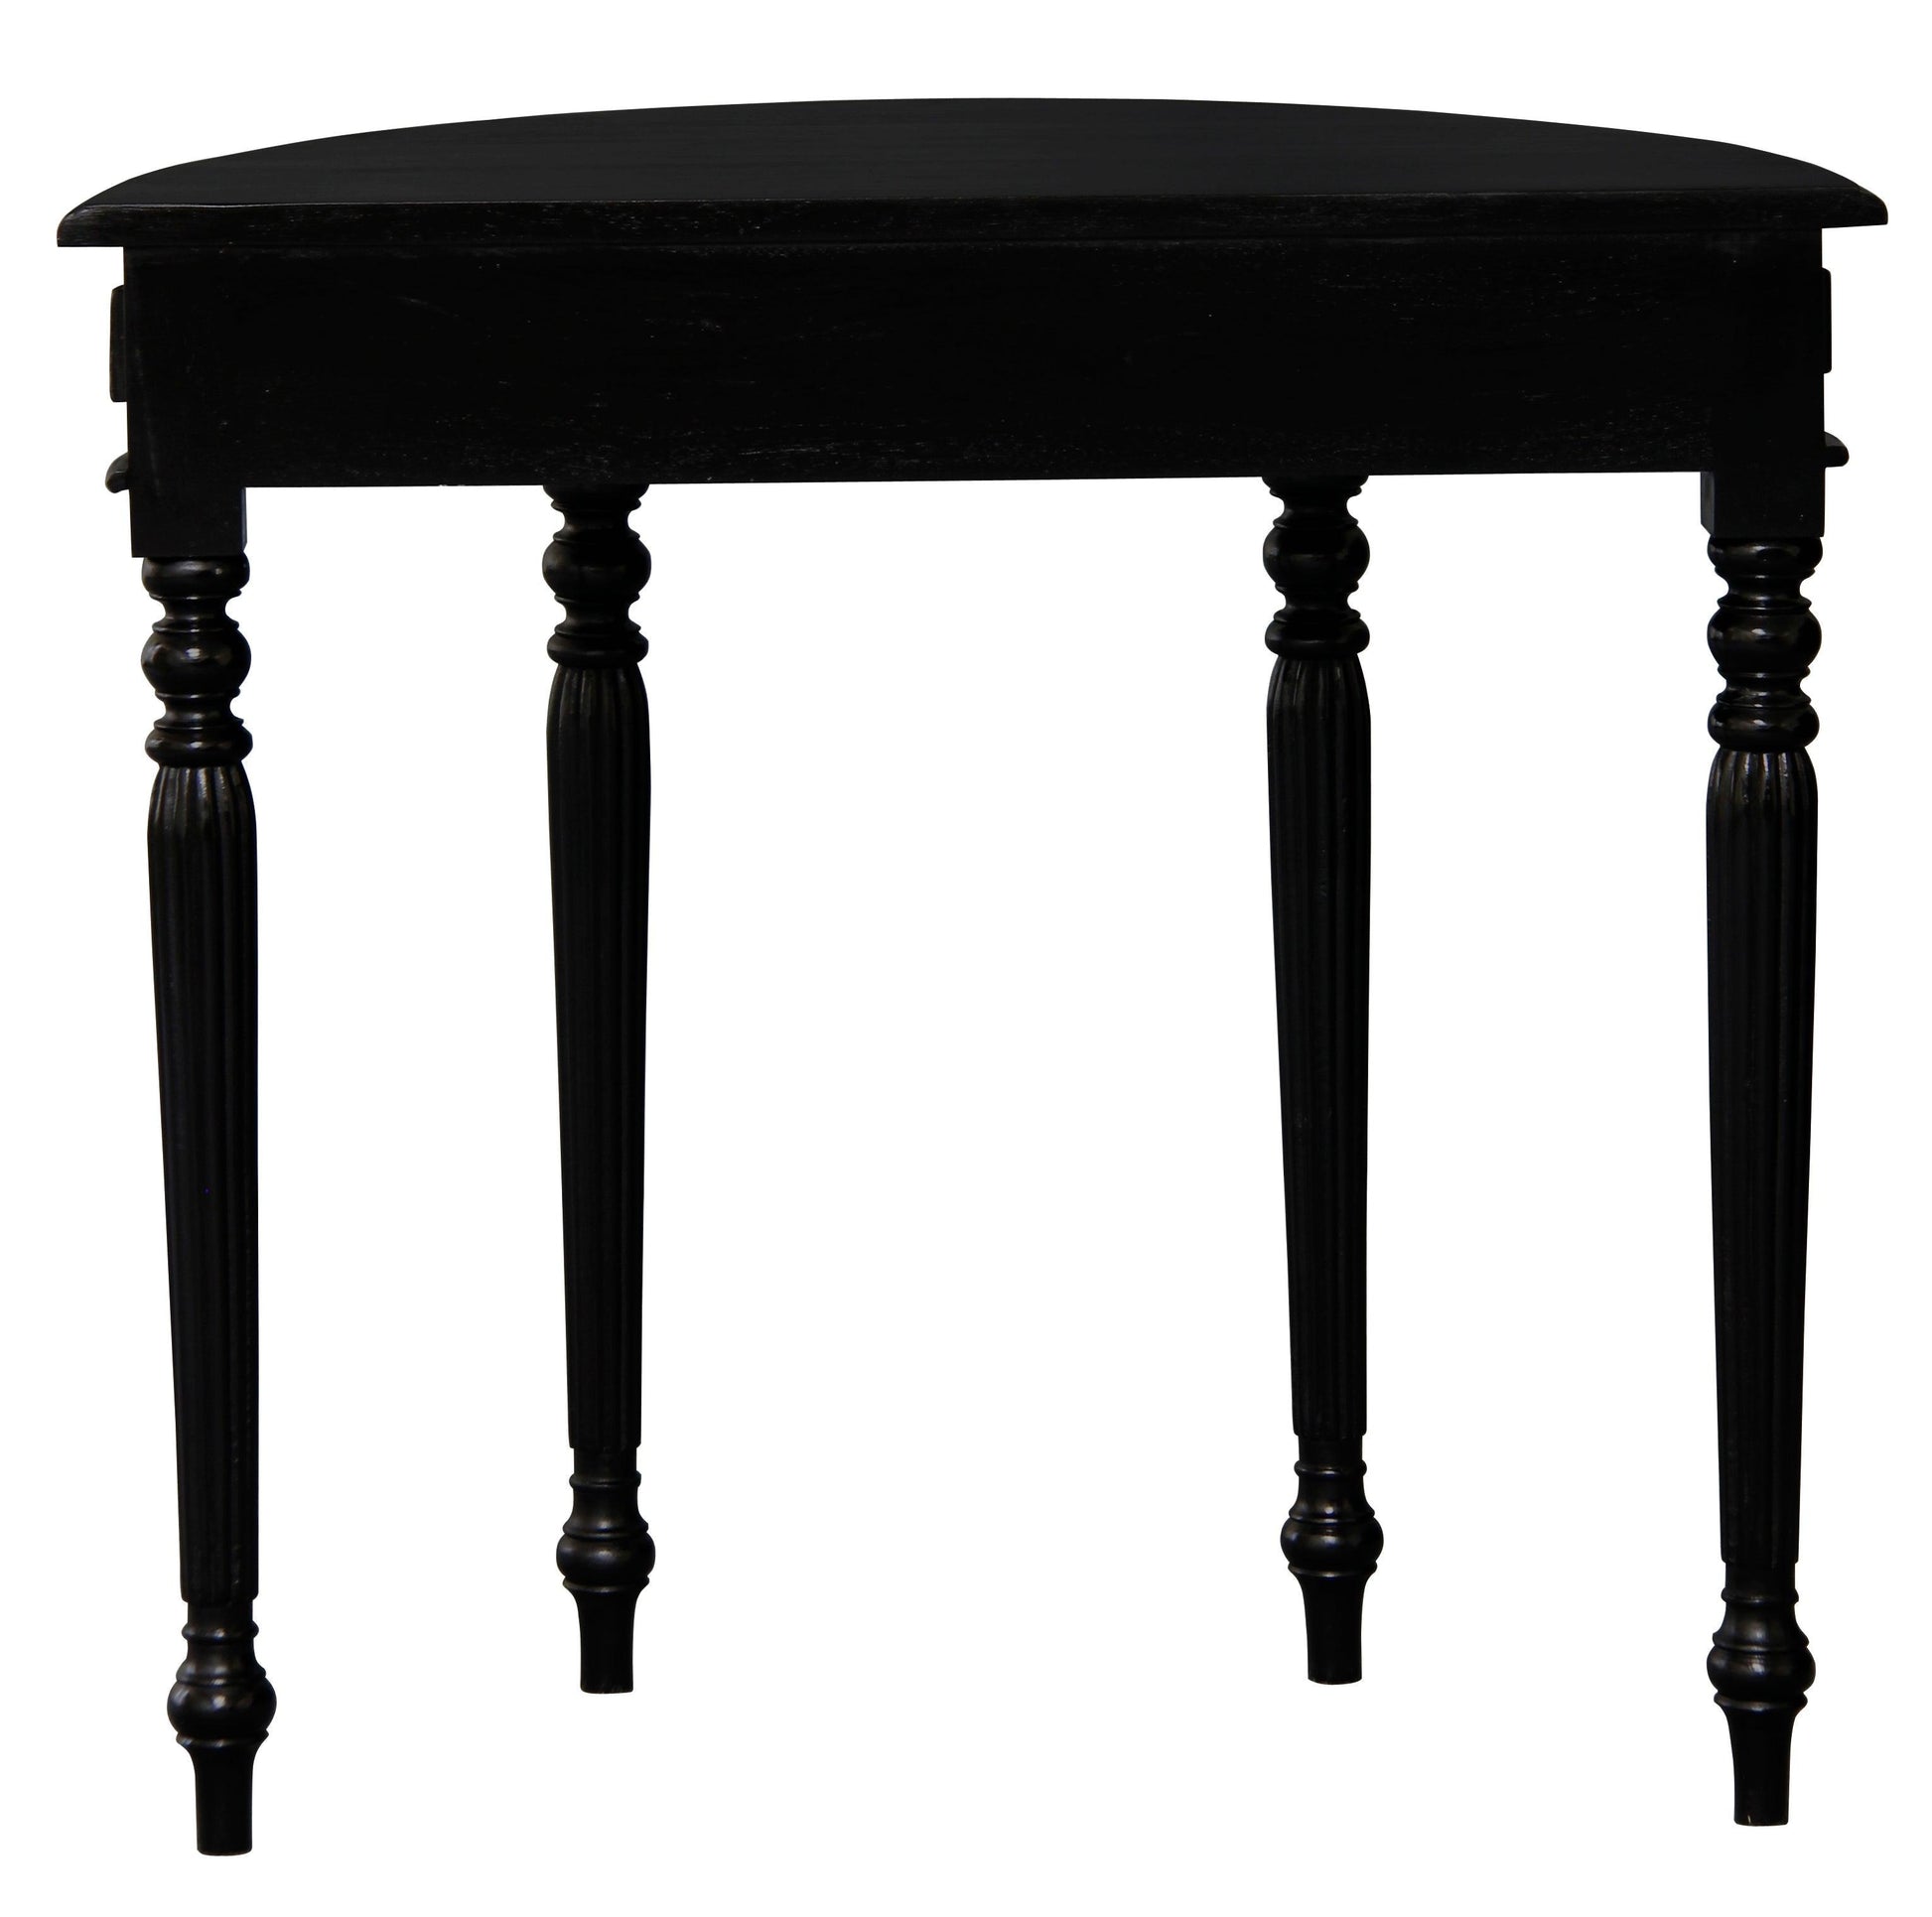 Huntley Turn Leg Half Round Sofa Table (Black) - TableT 28 (B)754169490942 3